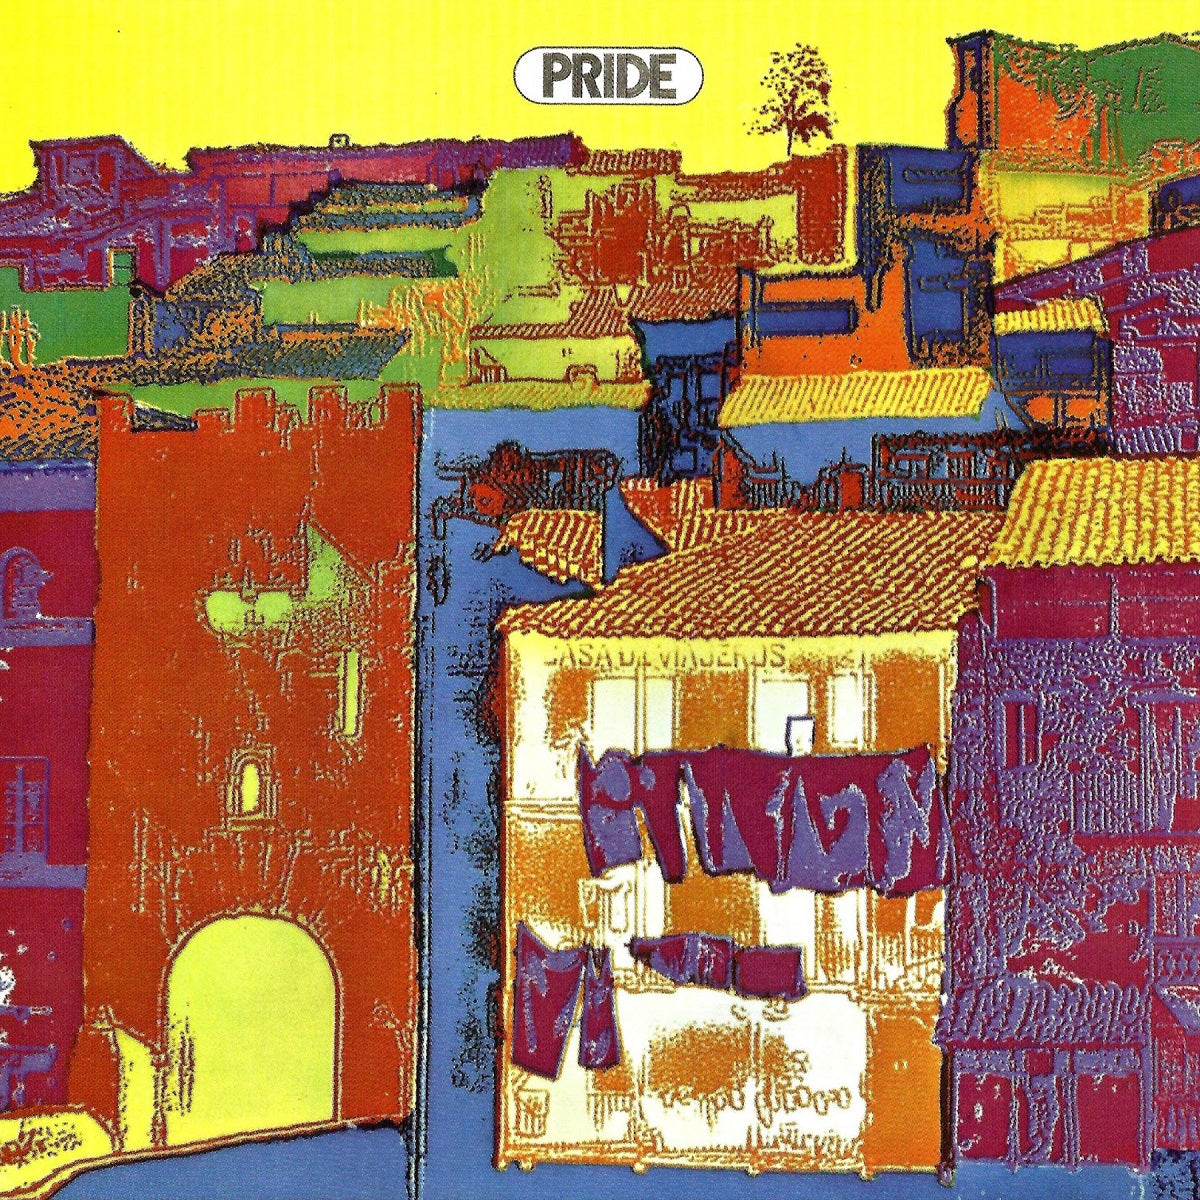 Pride (David Axelrod) - S/T LP (Reissue, RSD 2018 BF Exclusive)